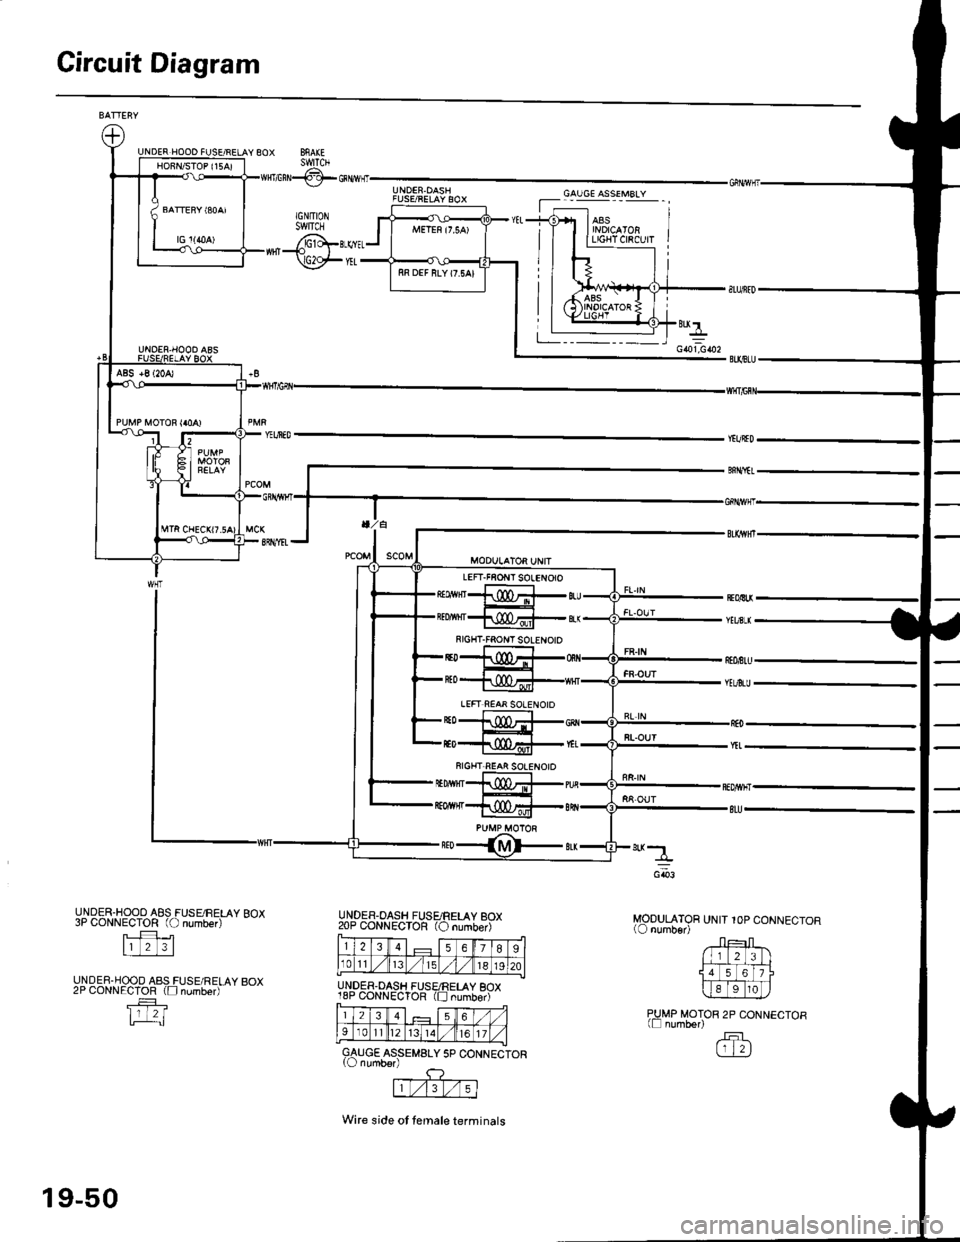 HONDA CIVIC 1999 6.G Service Manual Gircuit Diagram
MOOULATOR UNIT IOP CONNECTOR
zrJrF!_lll 2 3ll
14TiEltl
c@4
PIMP MOTOR 2P CONNECTOR(Ll number)fFlGTN
UNDER.HOOO A8S FUSE,/FELAY BOX3P CONNECTOR (O number)
| 2 3l
UNDER.HOOD AAS FUSE/REL